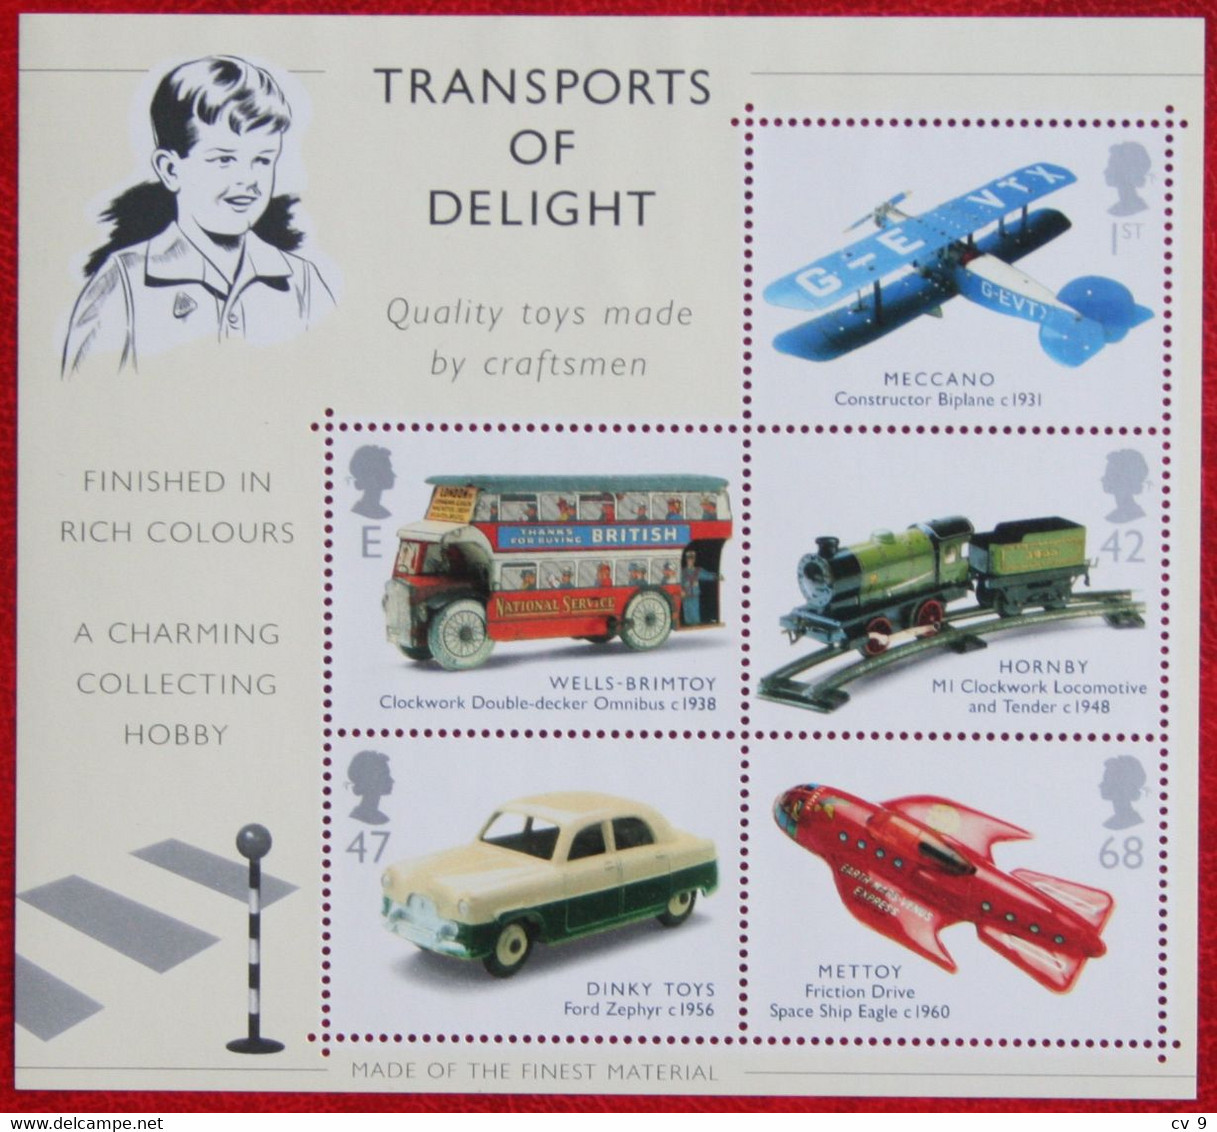 Classic Transport Toys Dinky (Mi 2152-2156 Block 16) 2003 POSTFRIS MNH ** ENGLAND GRANDE-BRETAGNE GB GREAT BRITAIN - Hojas Bloque